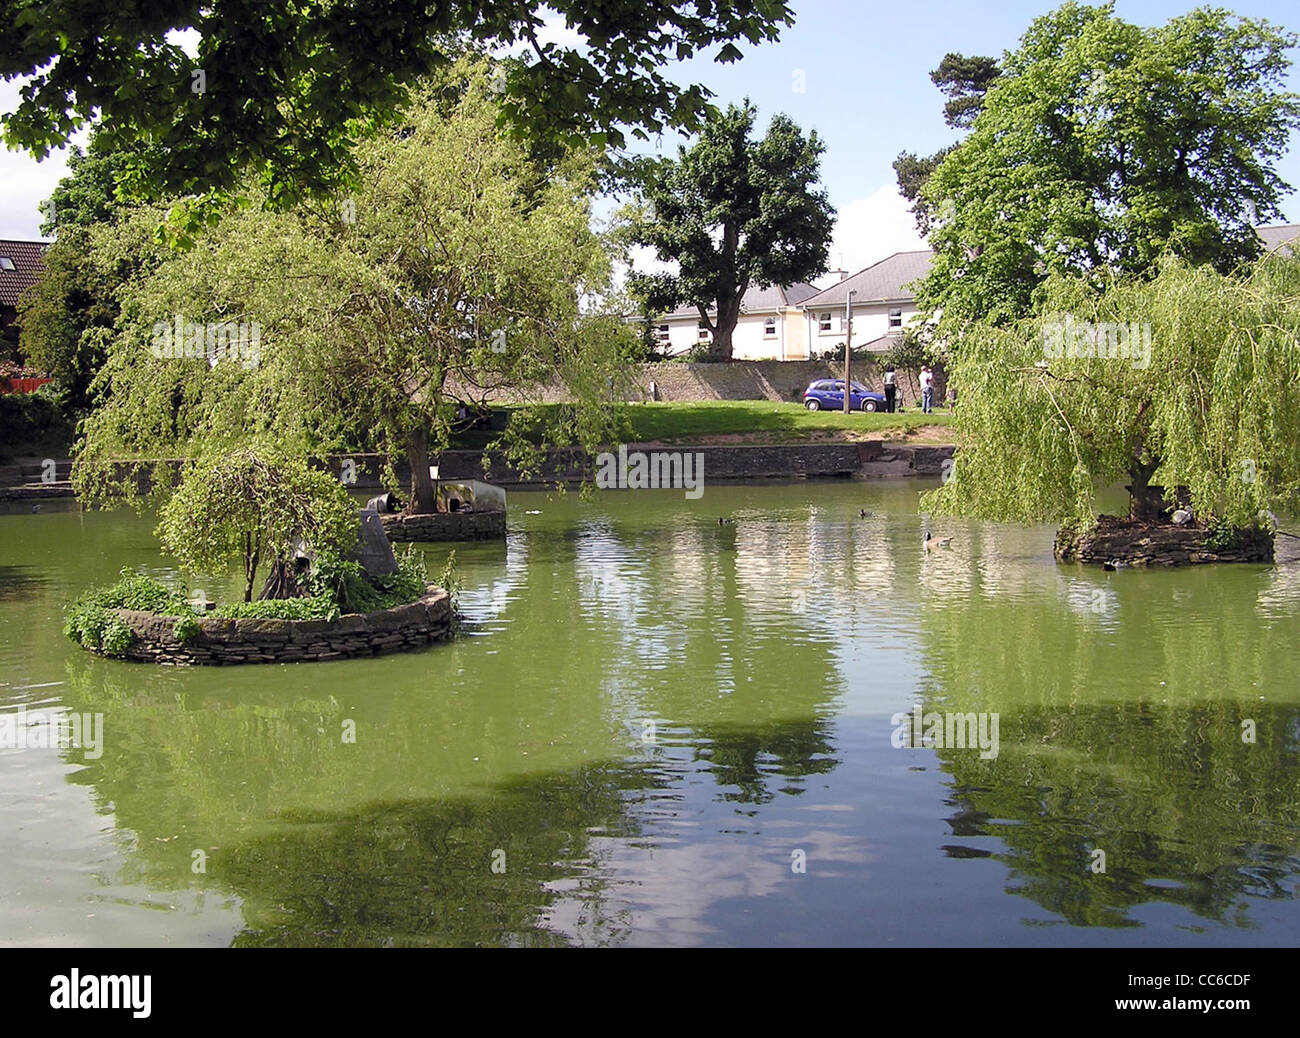 The village duck pond in Winterbourne, near Bristol, England. Stock Photo